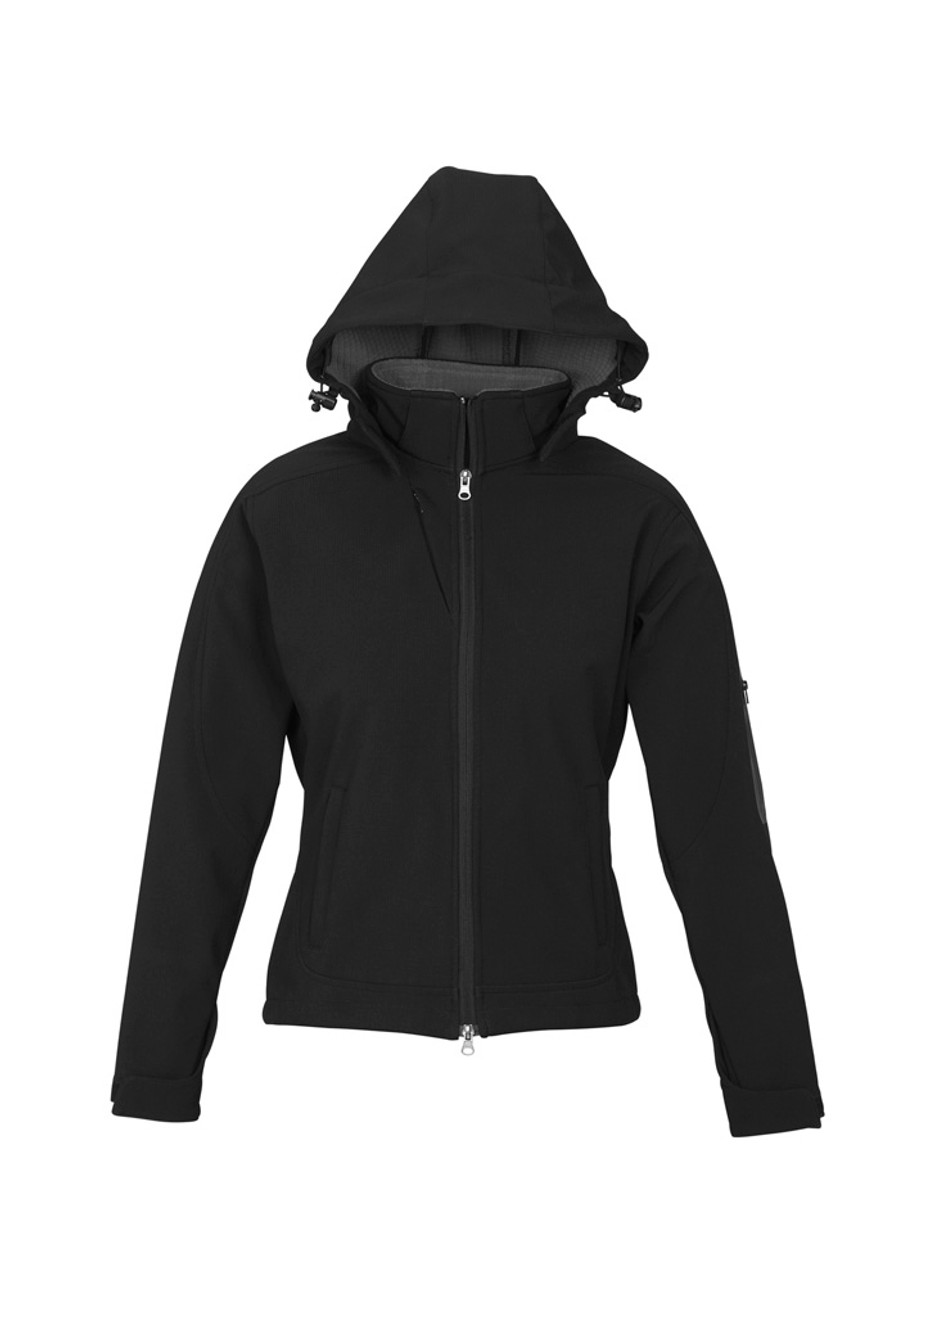 Biz Collection J10920 Ladies Summit Jacket | Available Colours: Black/Graphite, Navy/Graphite